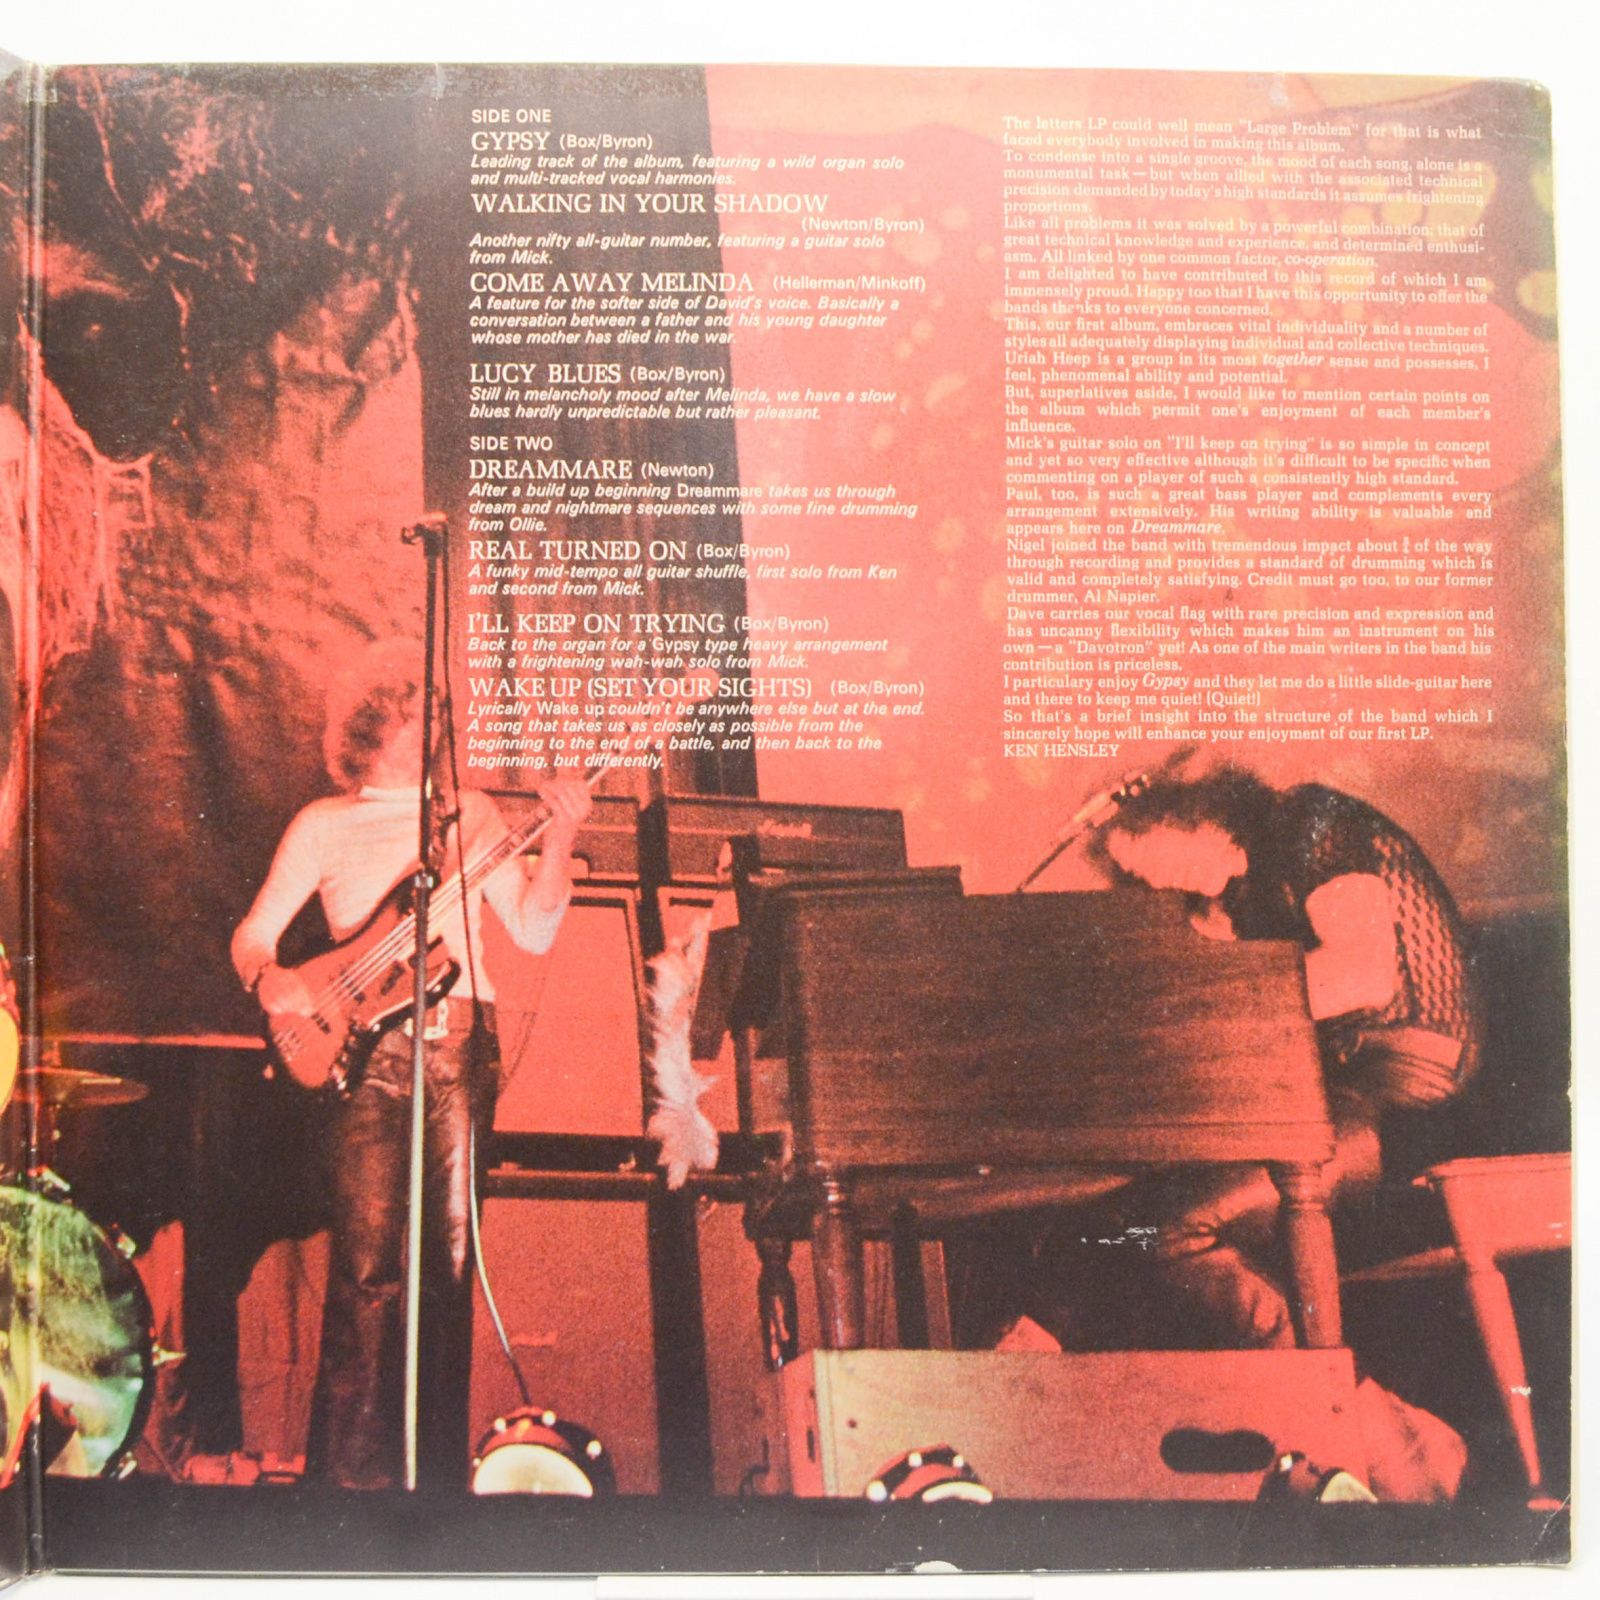 Uriah Heep — ...Very 'Eavy ...Very 'Umble, 1971